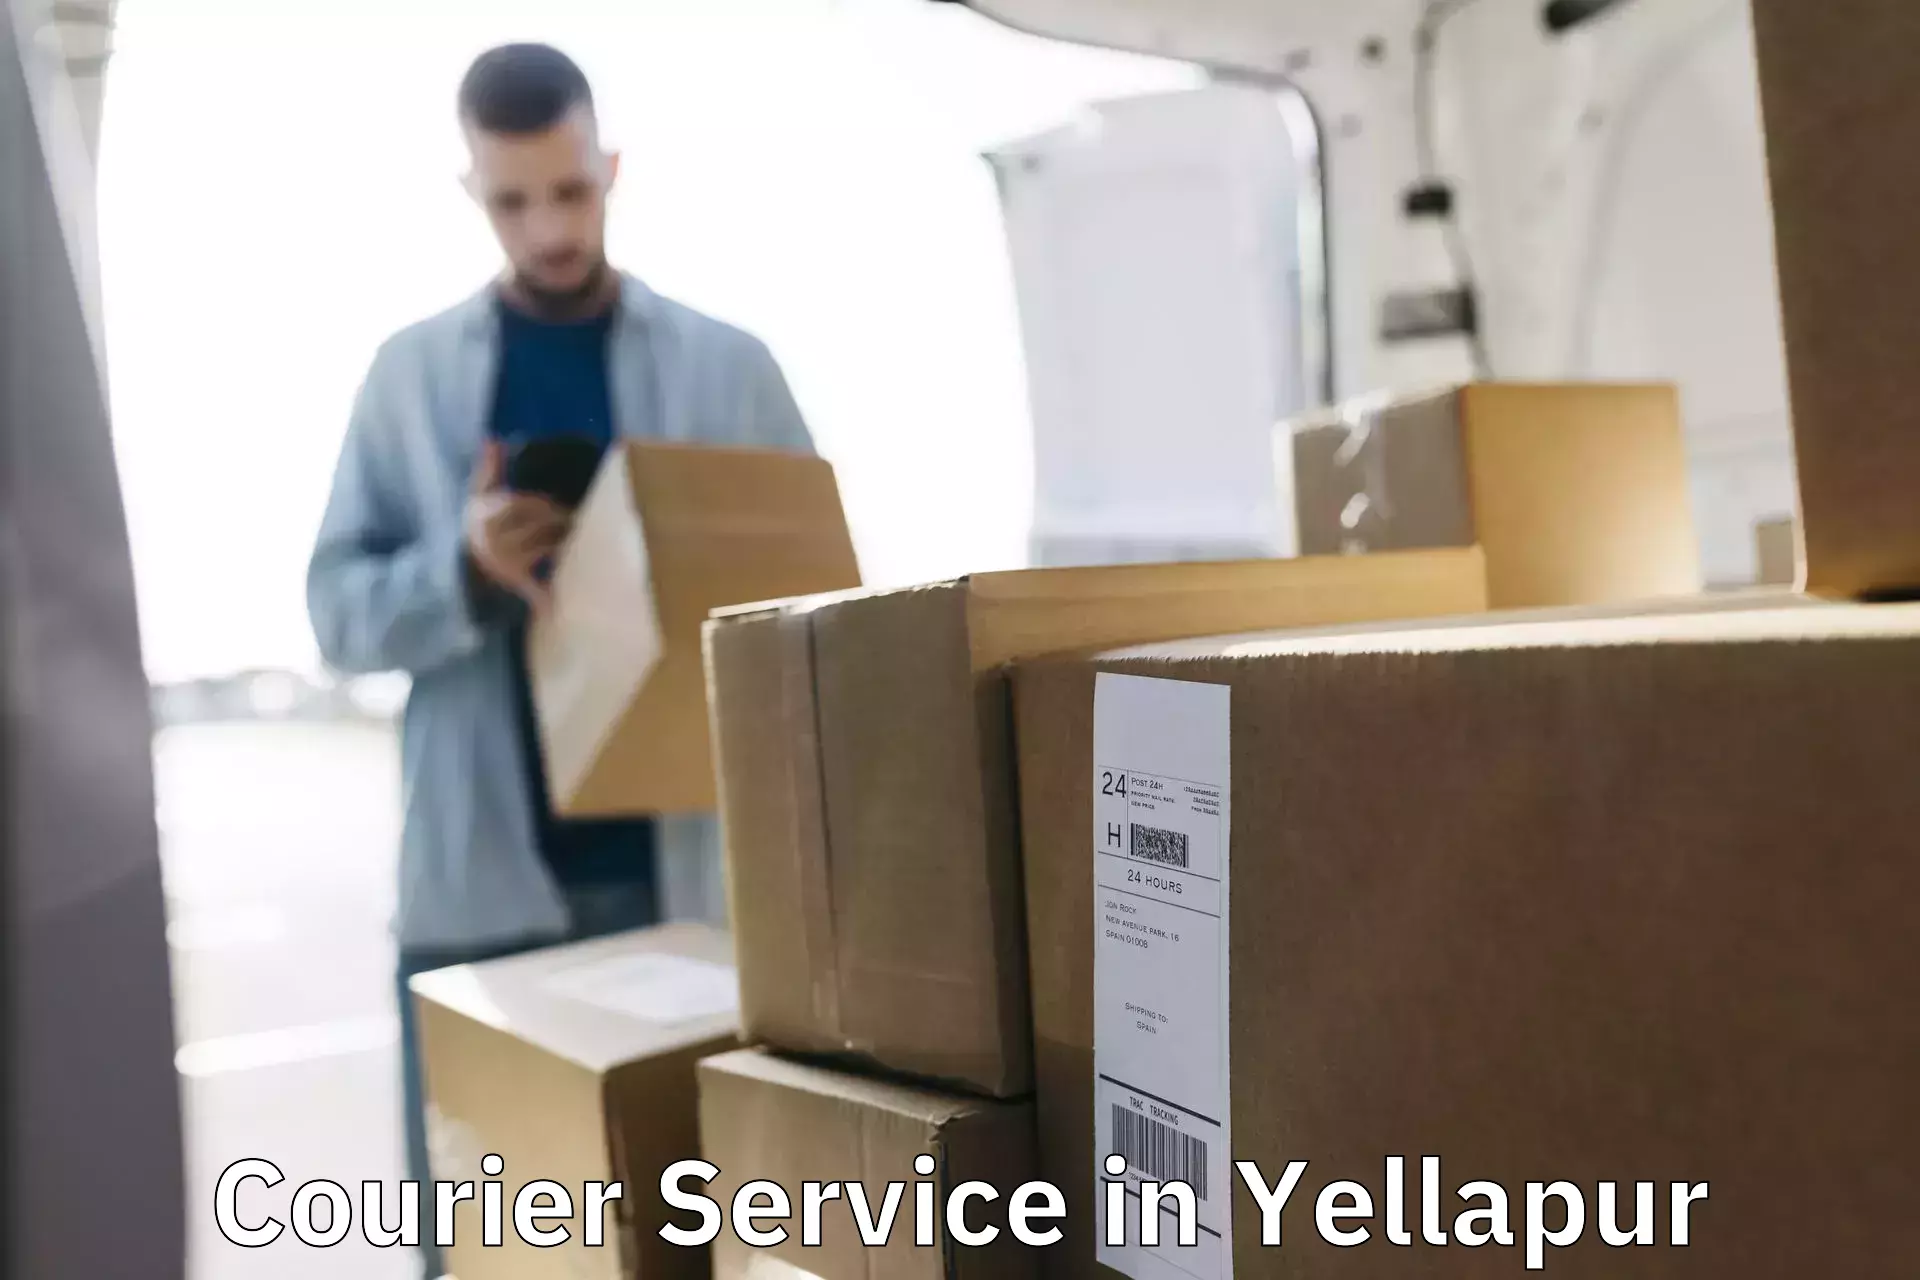 Efficient parcel tracking in Yellapur